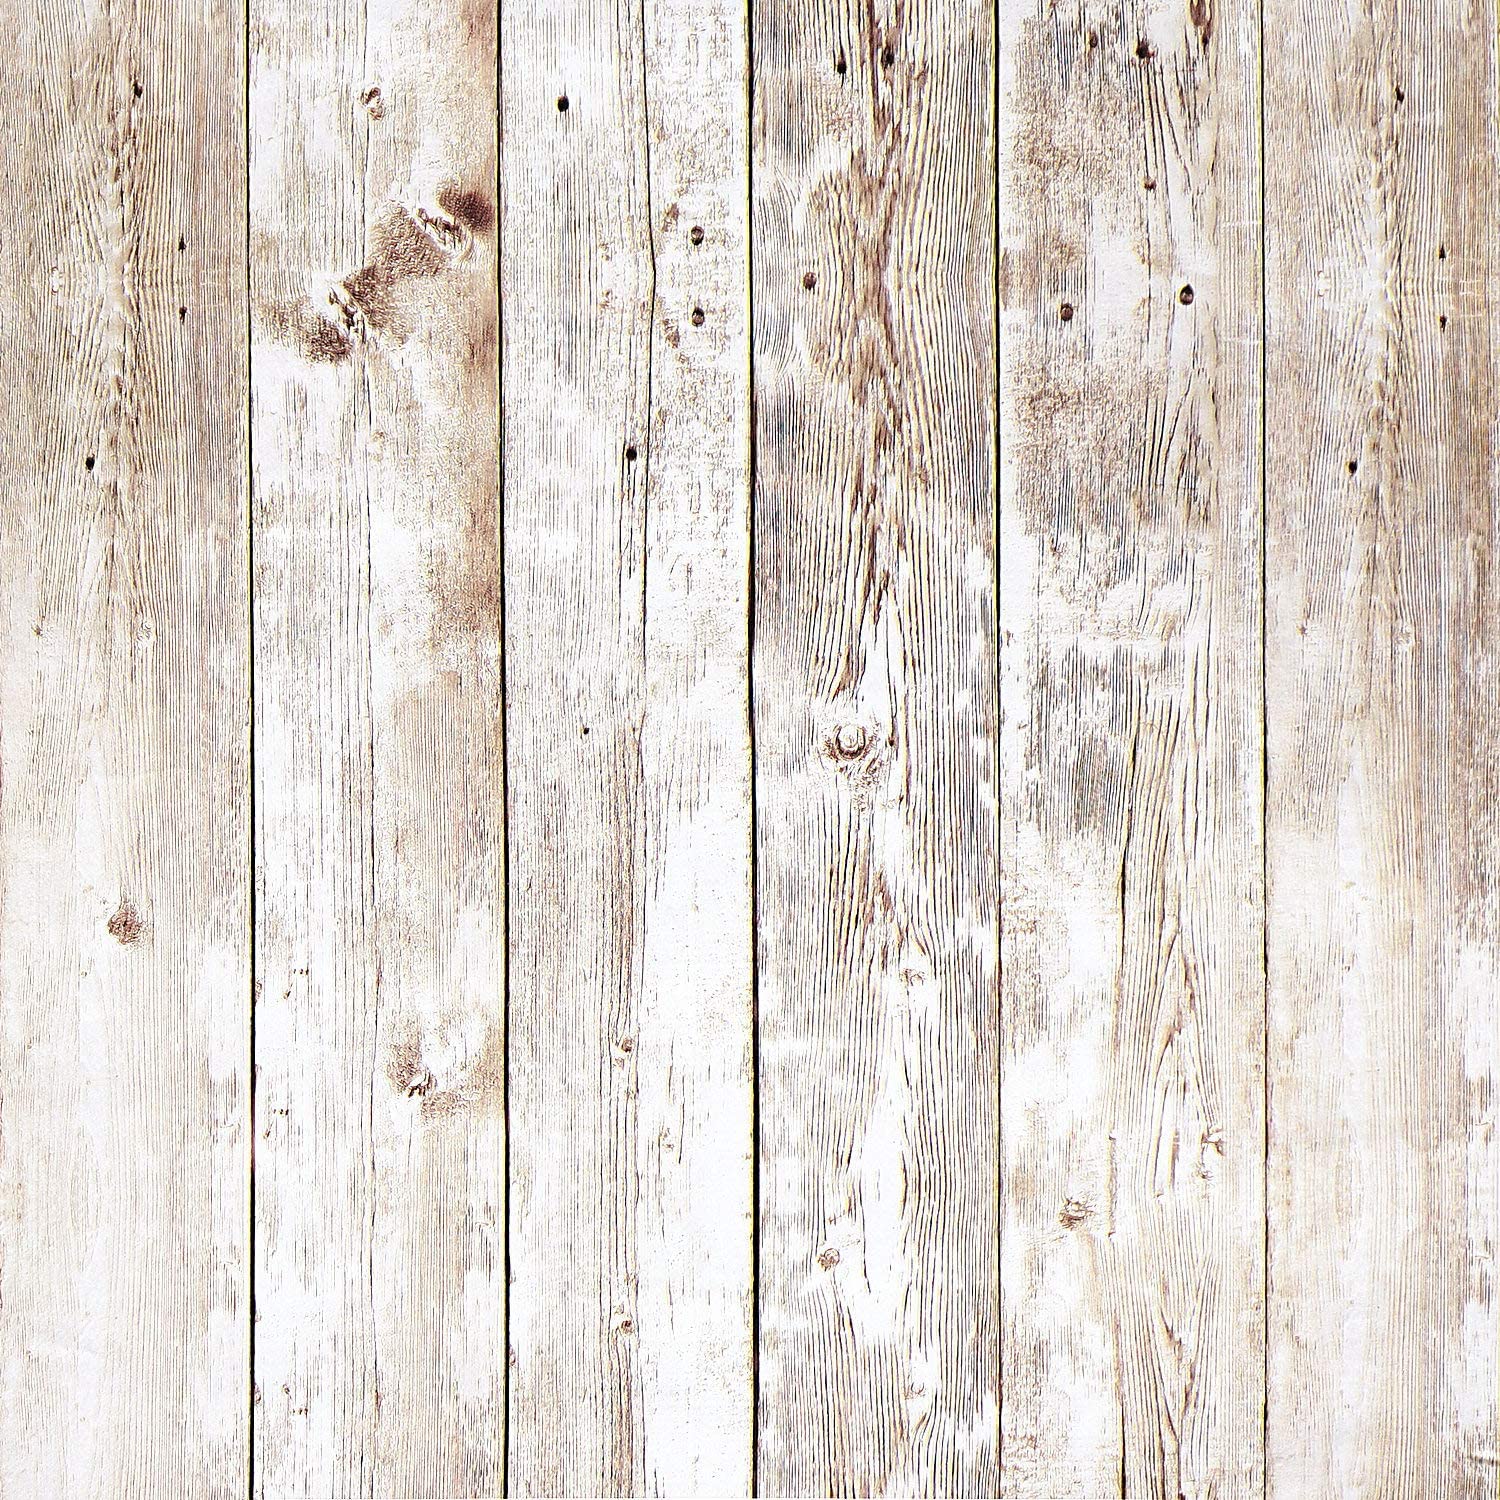 4ft Rustic Wood Wallpaper Plank Self Adhesive